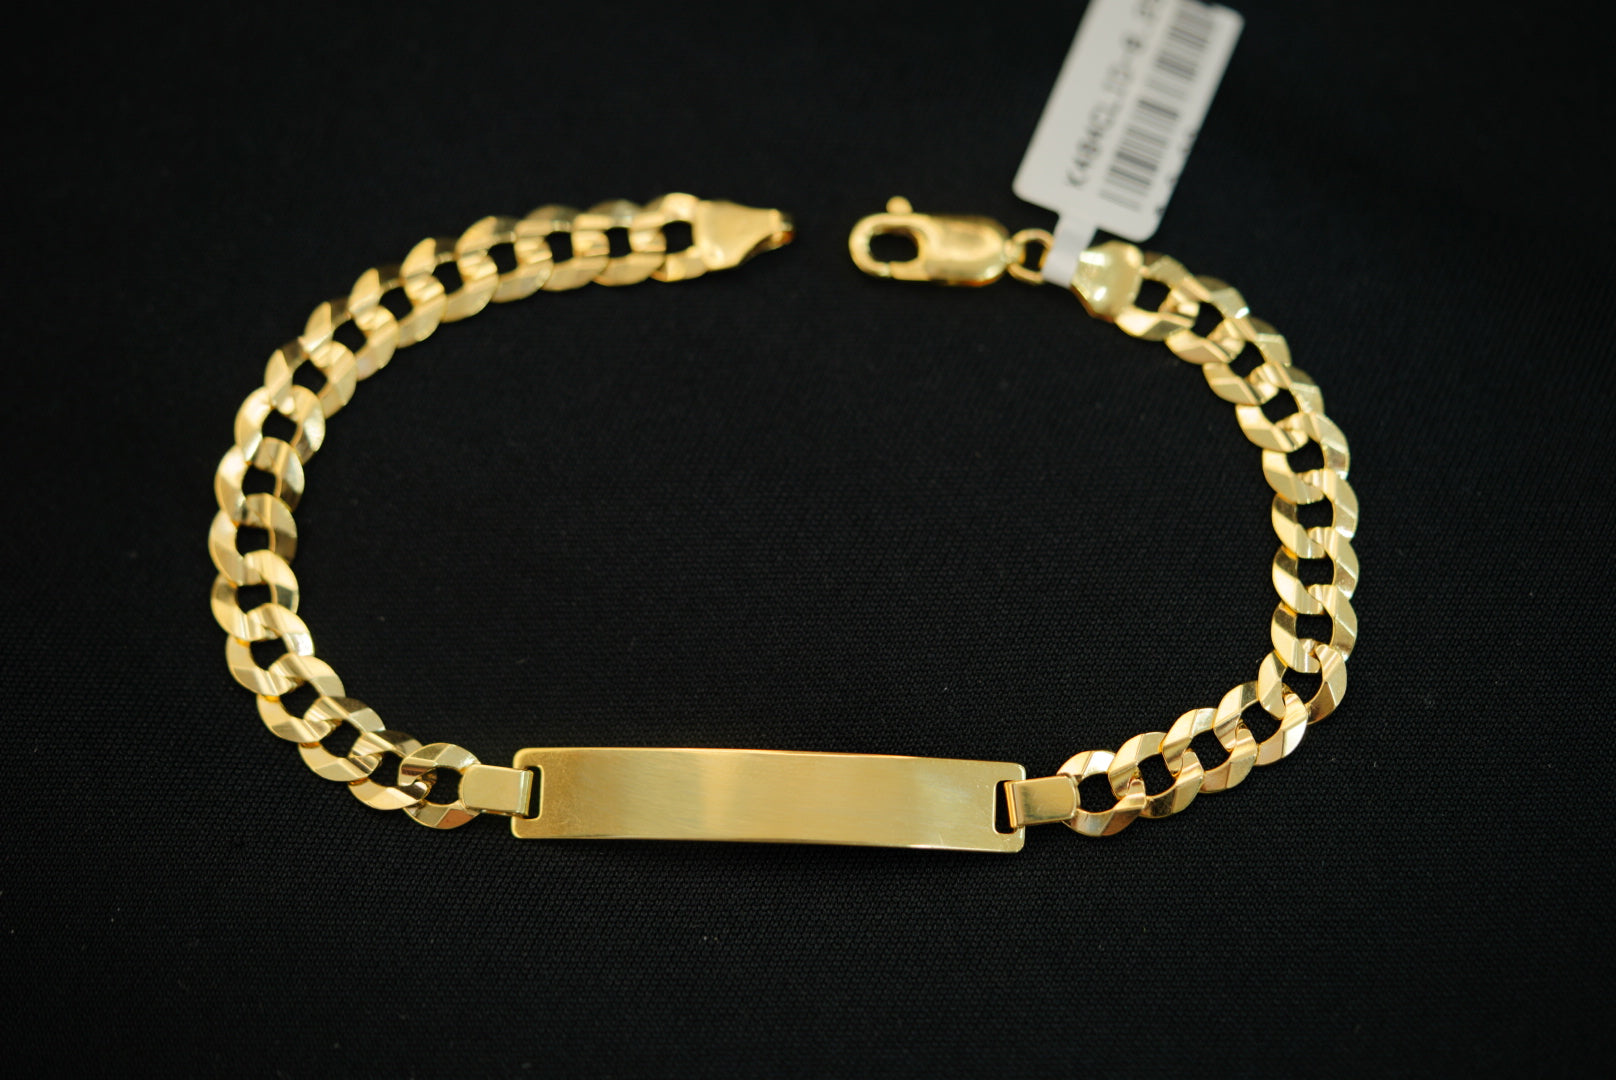 10k Gold Plate with Diamond Cut Bracelet